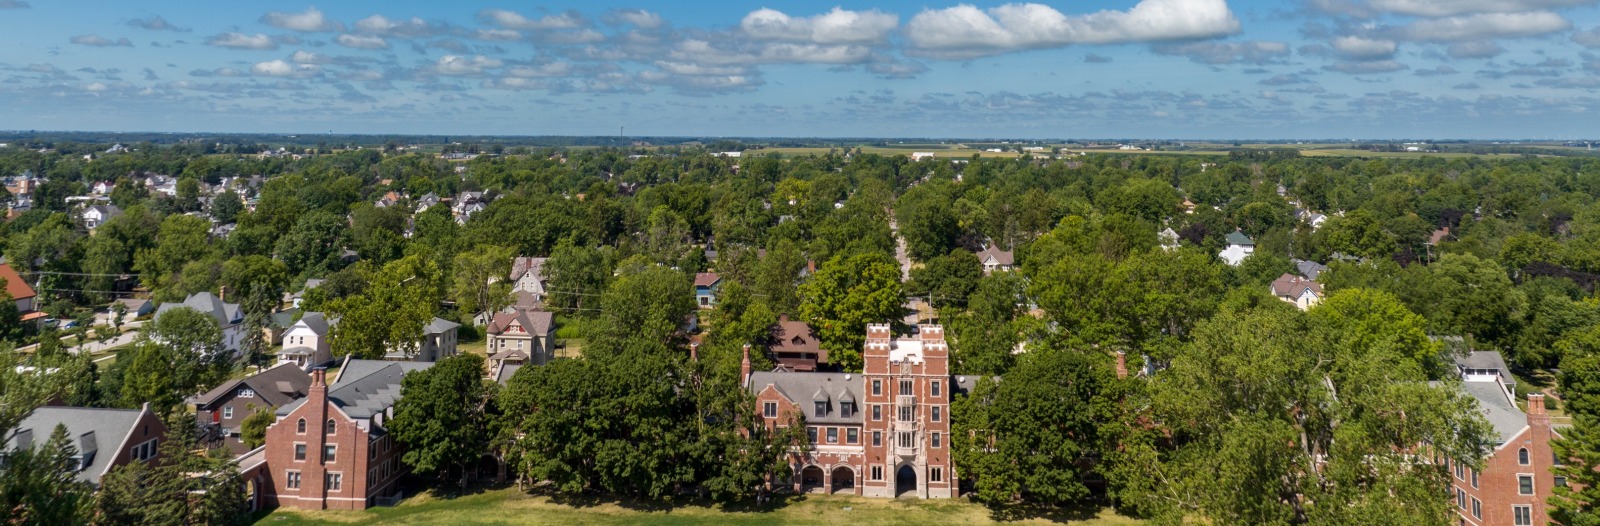 grinnell college campus visit